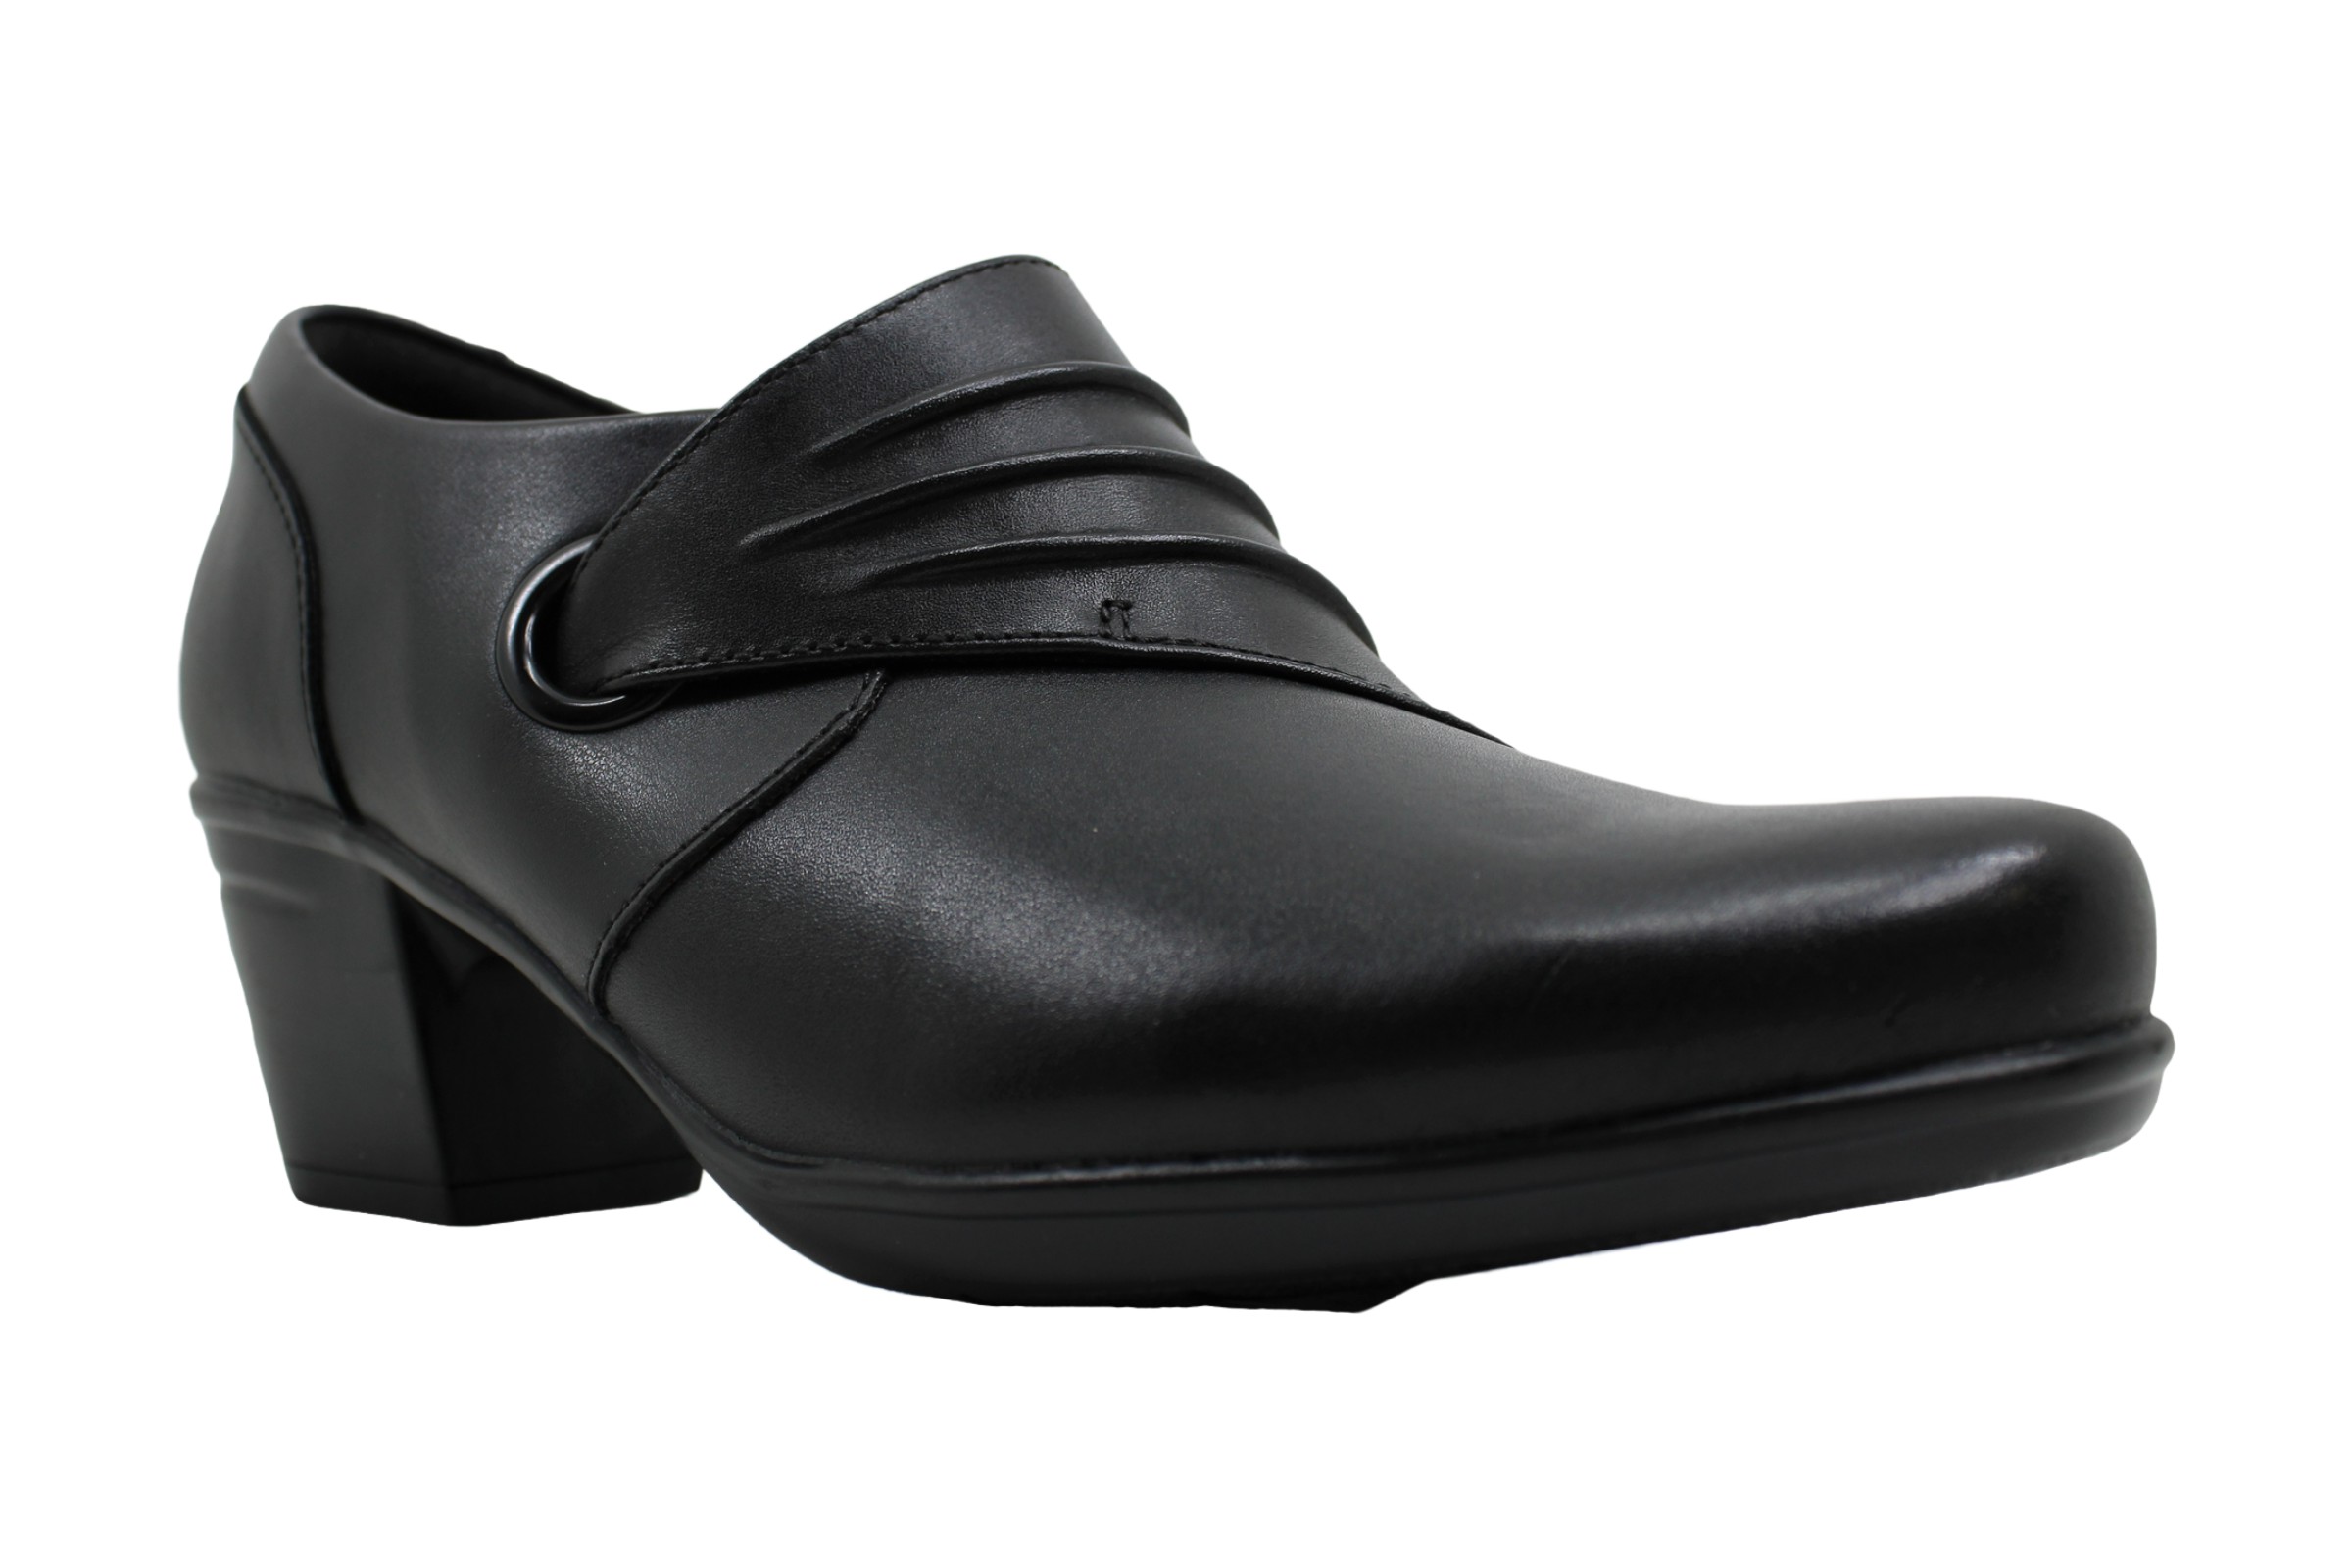 Clarks Womens Emslie Closed Toe Mules, Black, Size 8.0 Z7jG | eBay